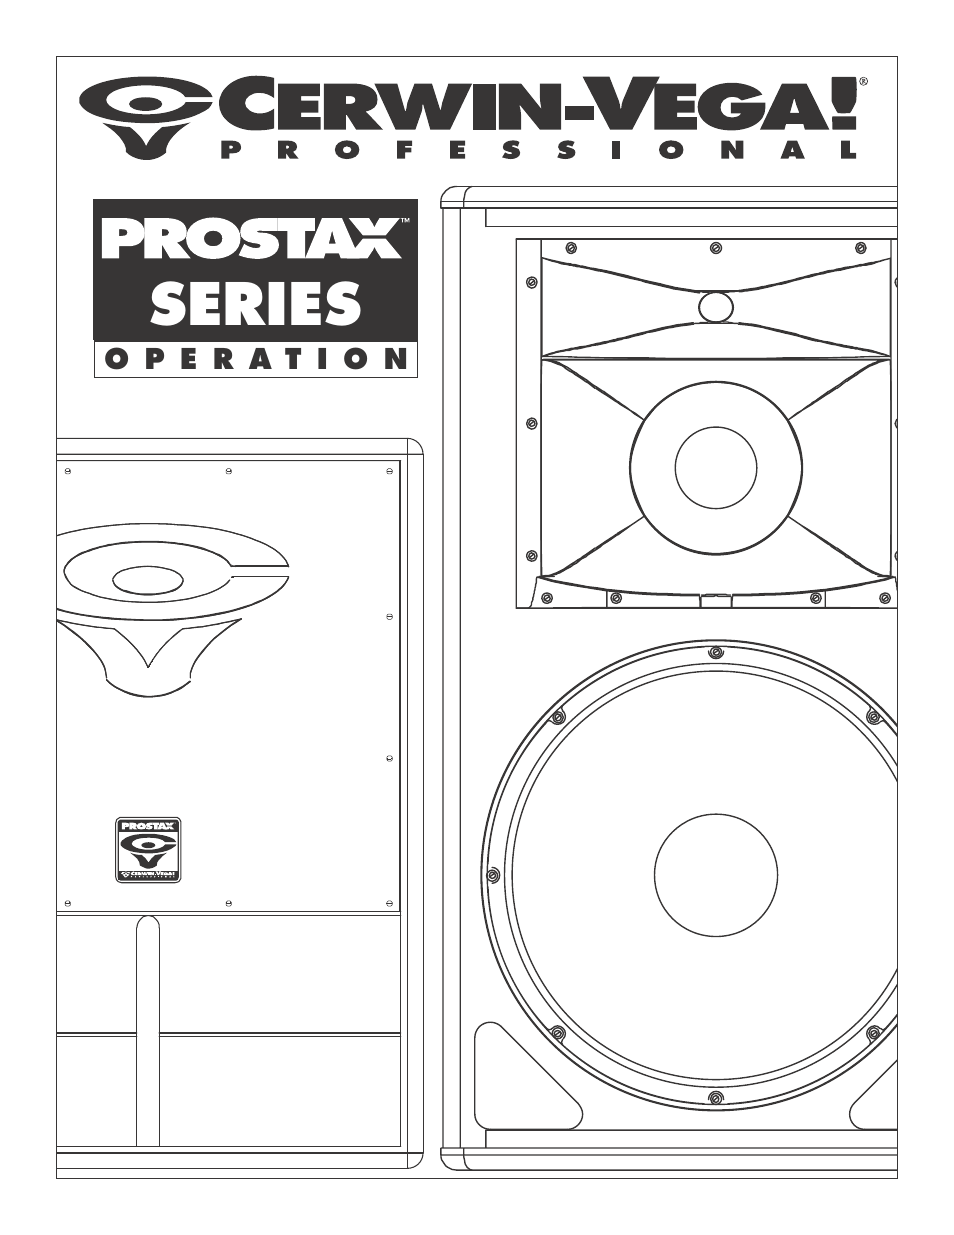 PROSTAX Series Manual multi